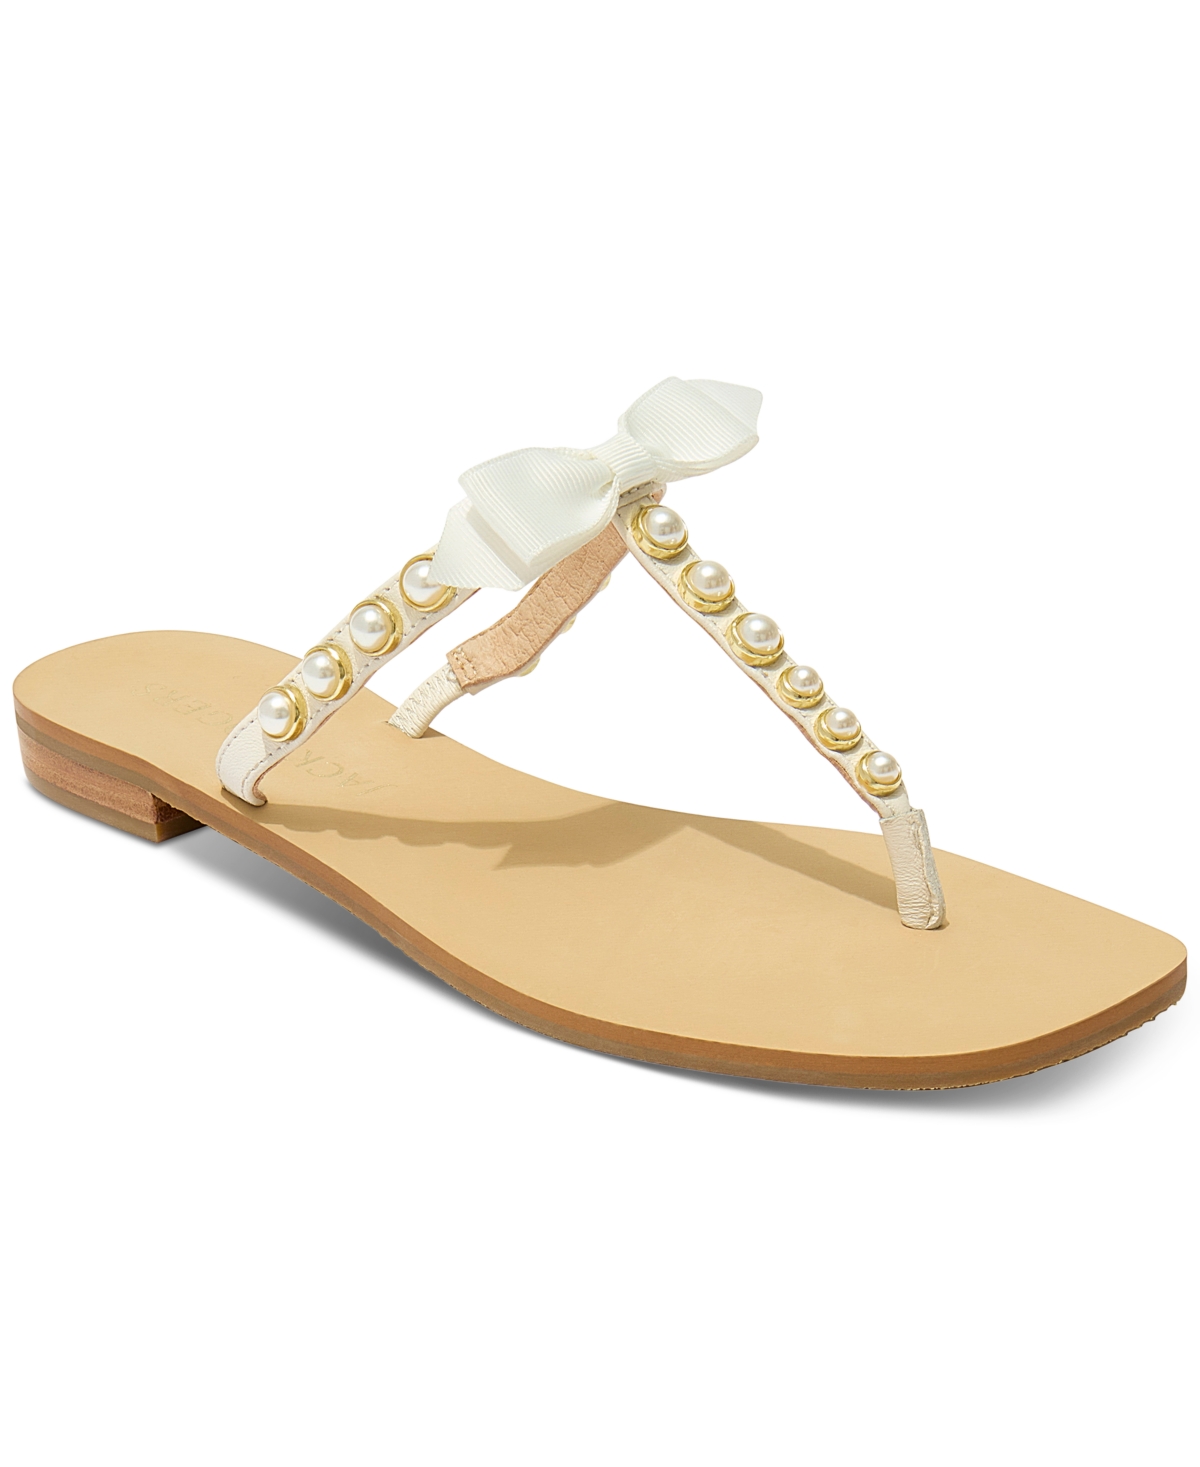 Jack Rogers Women's Sandpiper Bow Embellished Flat Sandals